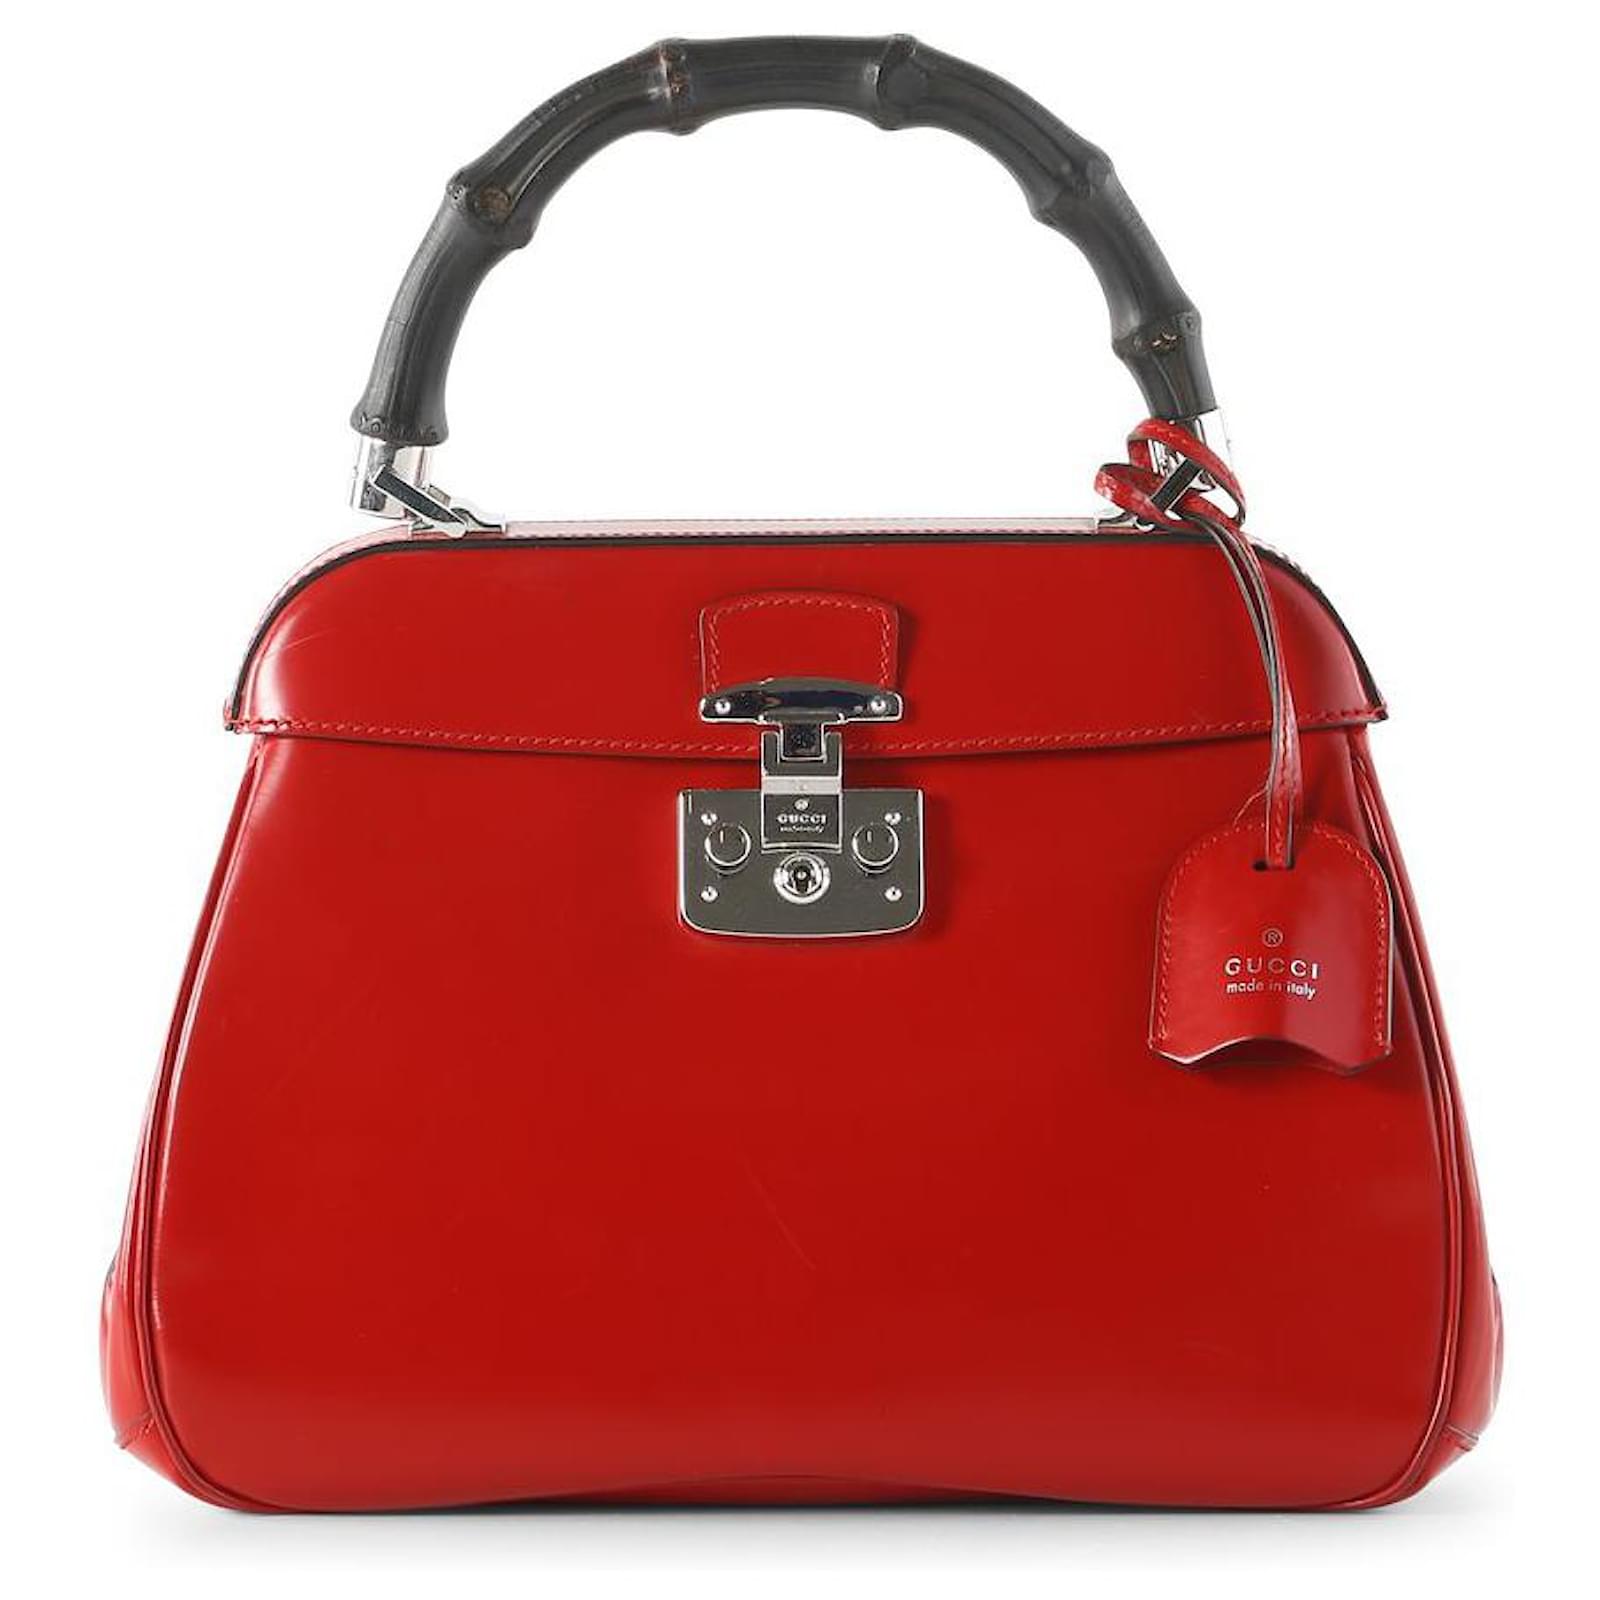 Locks & Keys Handbags, Bags